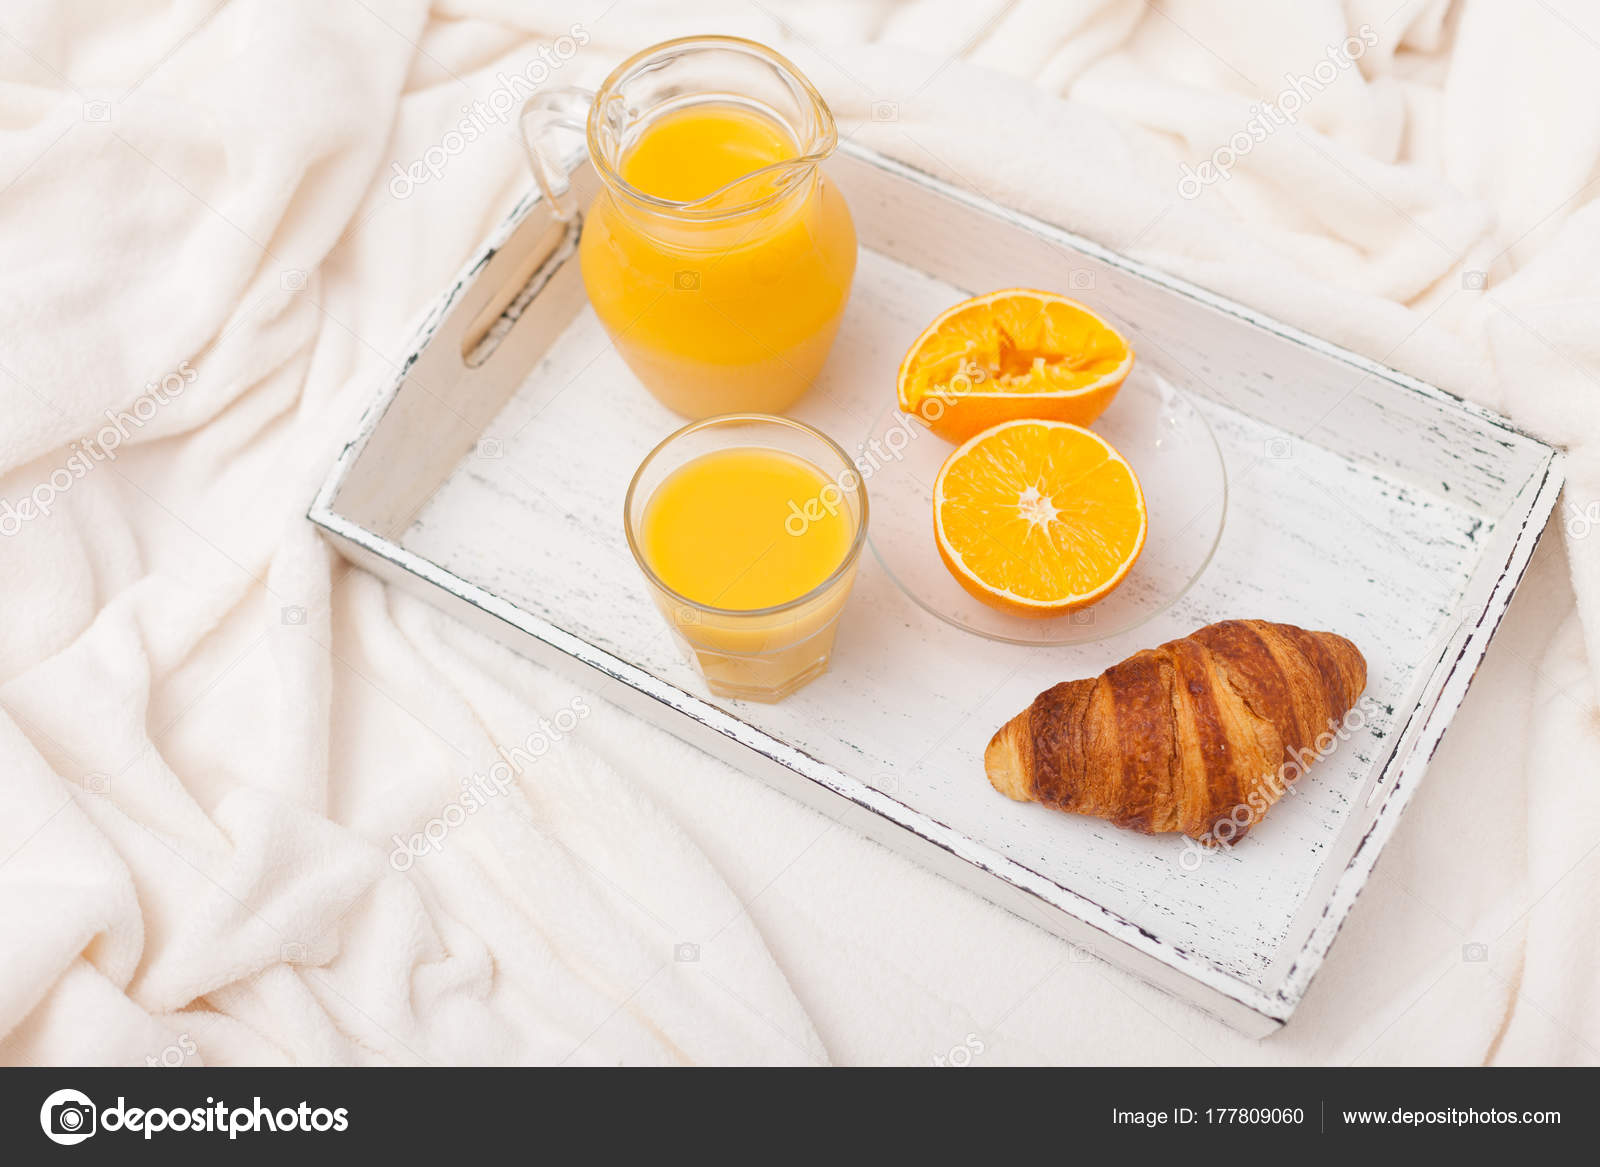 depositphotos_177809060-stock-photo-freshly-baked-croissant-orange-juice.jpg